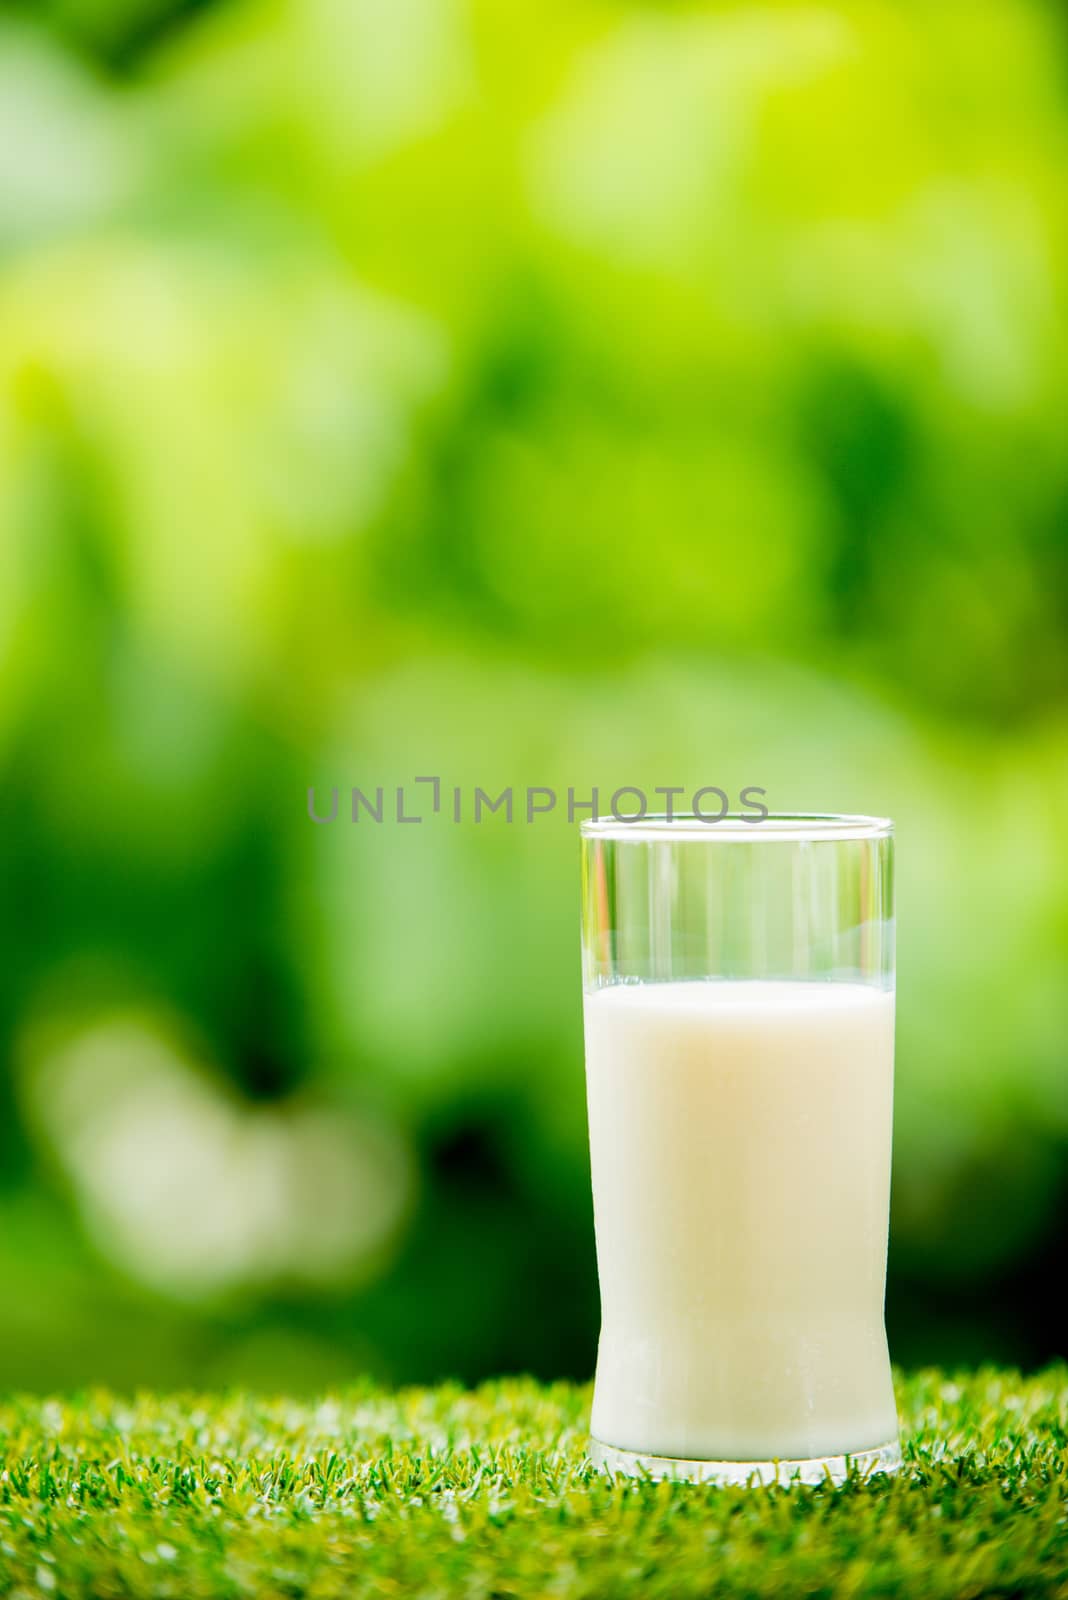 milk glass on grass by antpkr